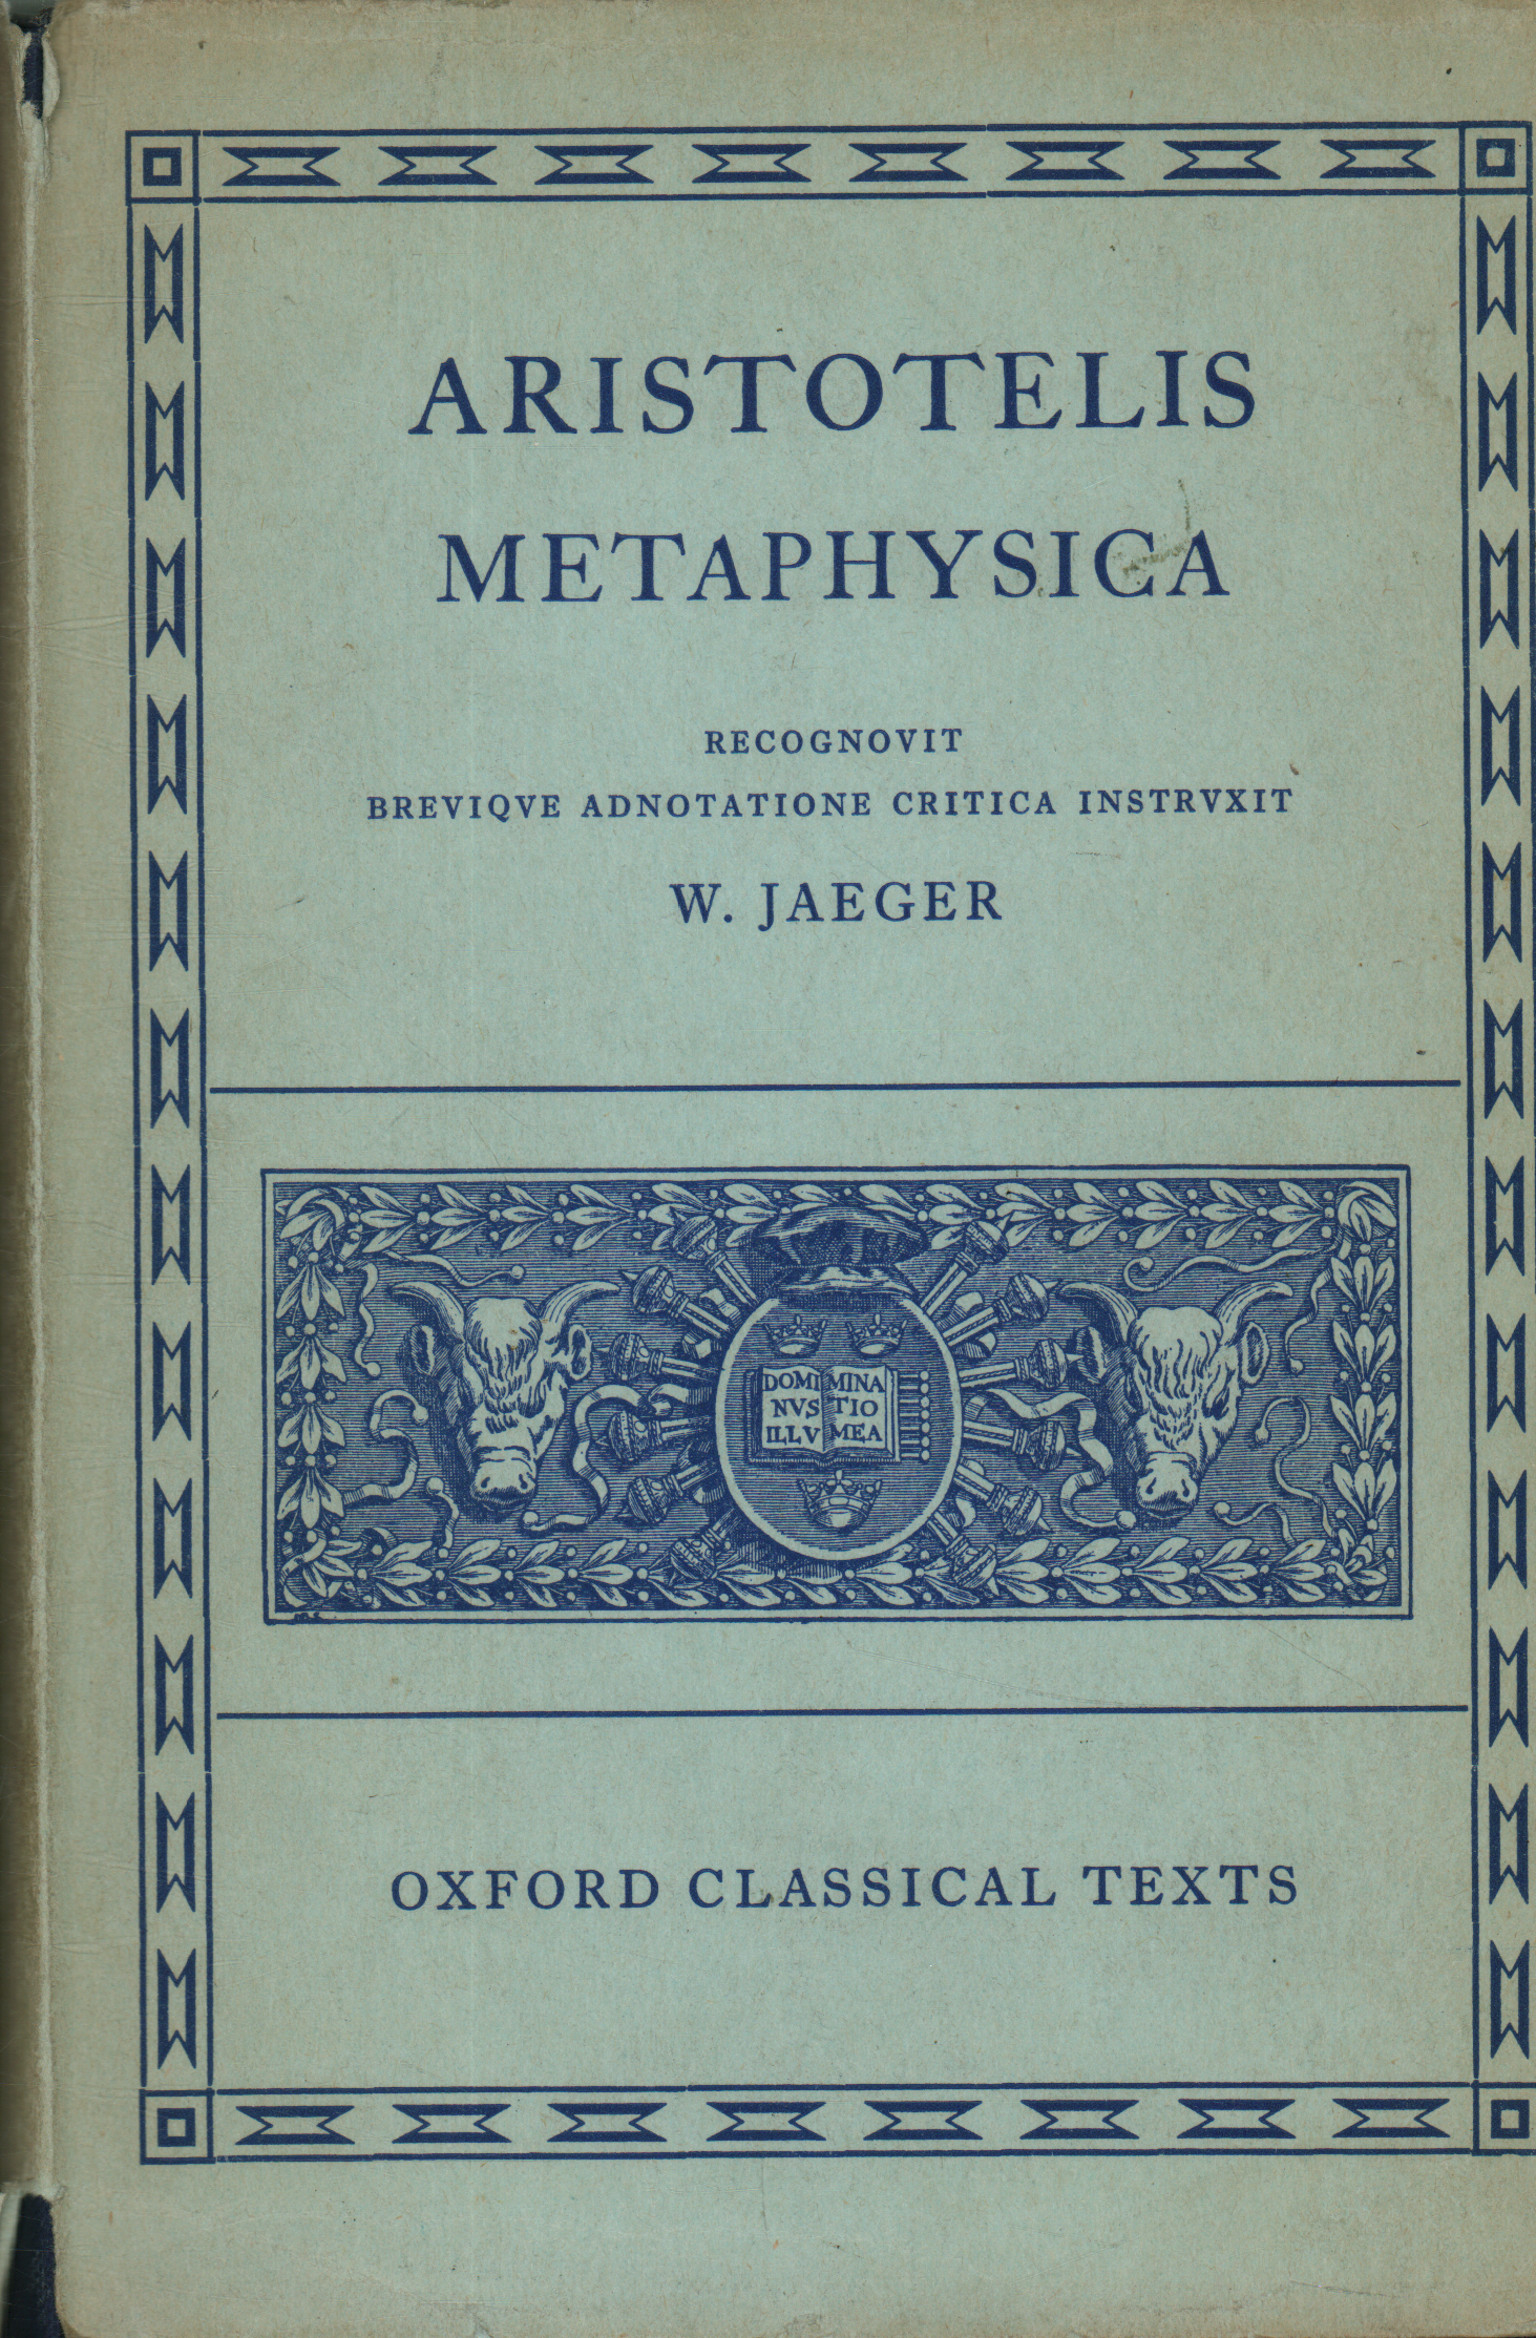 Metafísica, Aristotelis